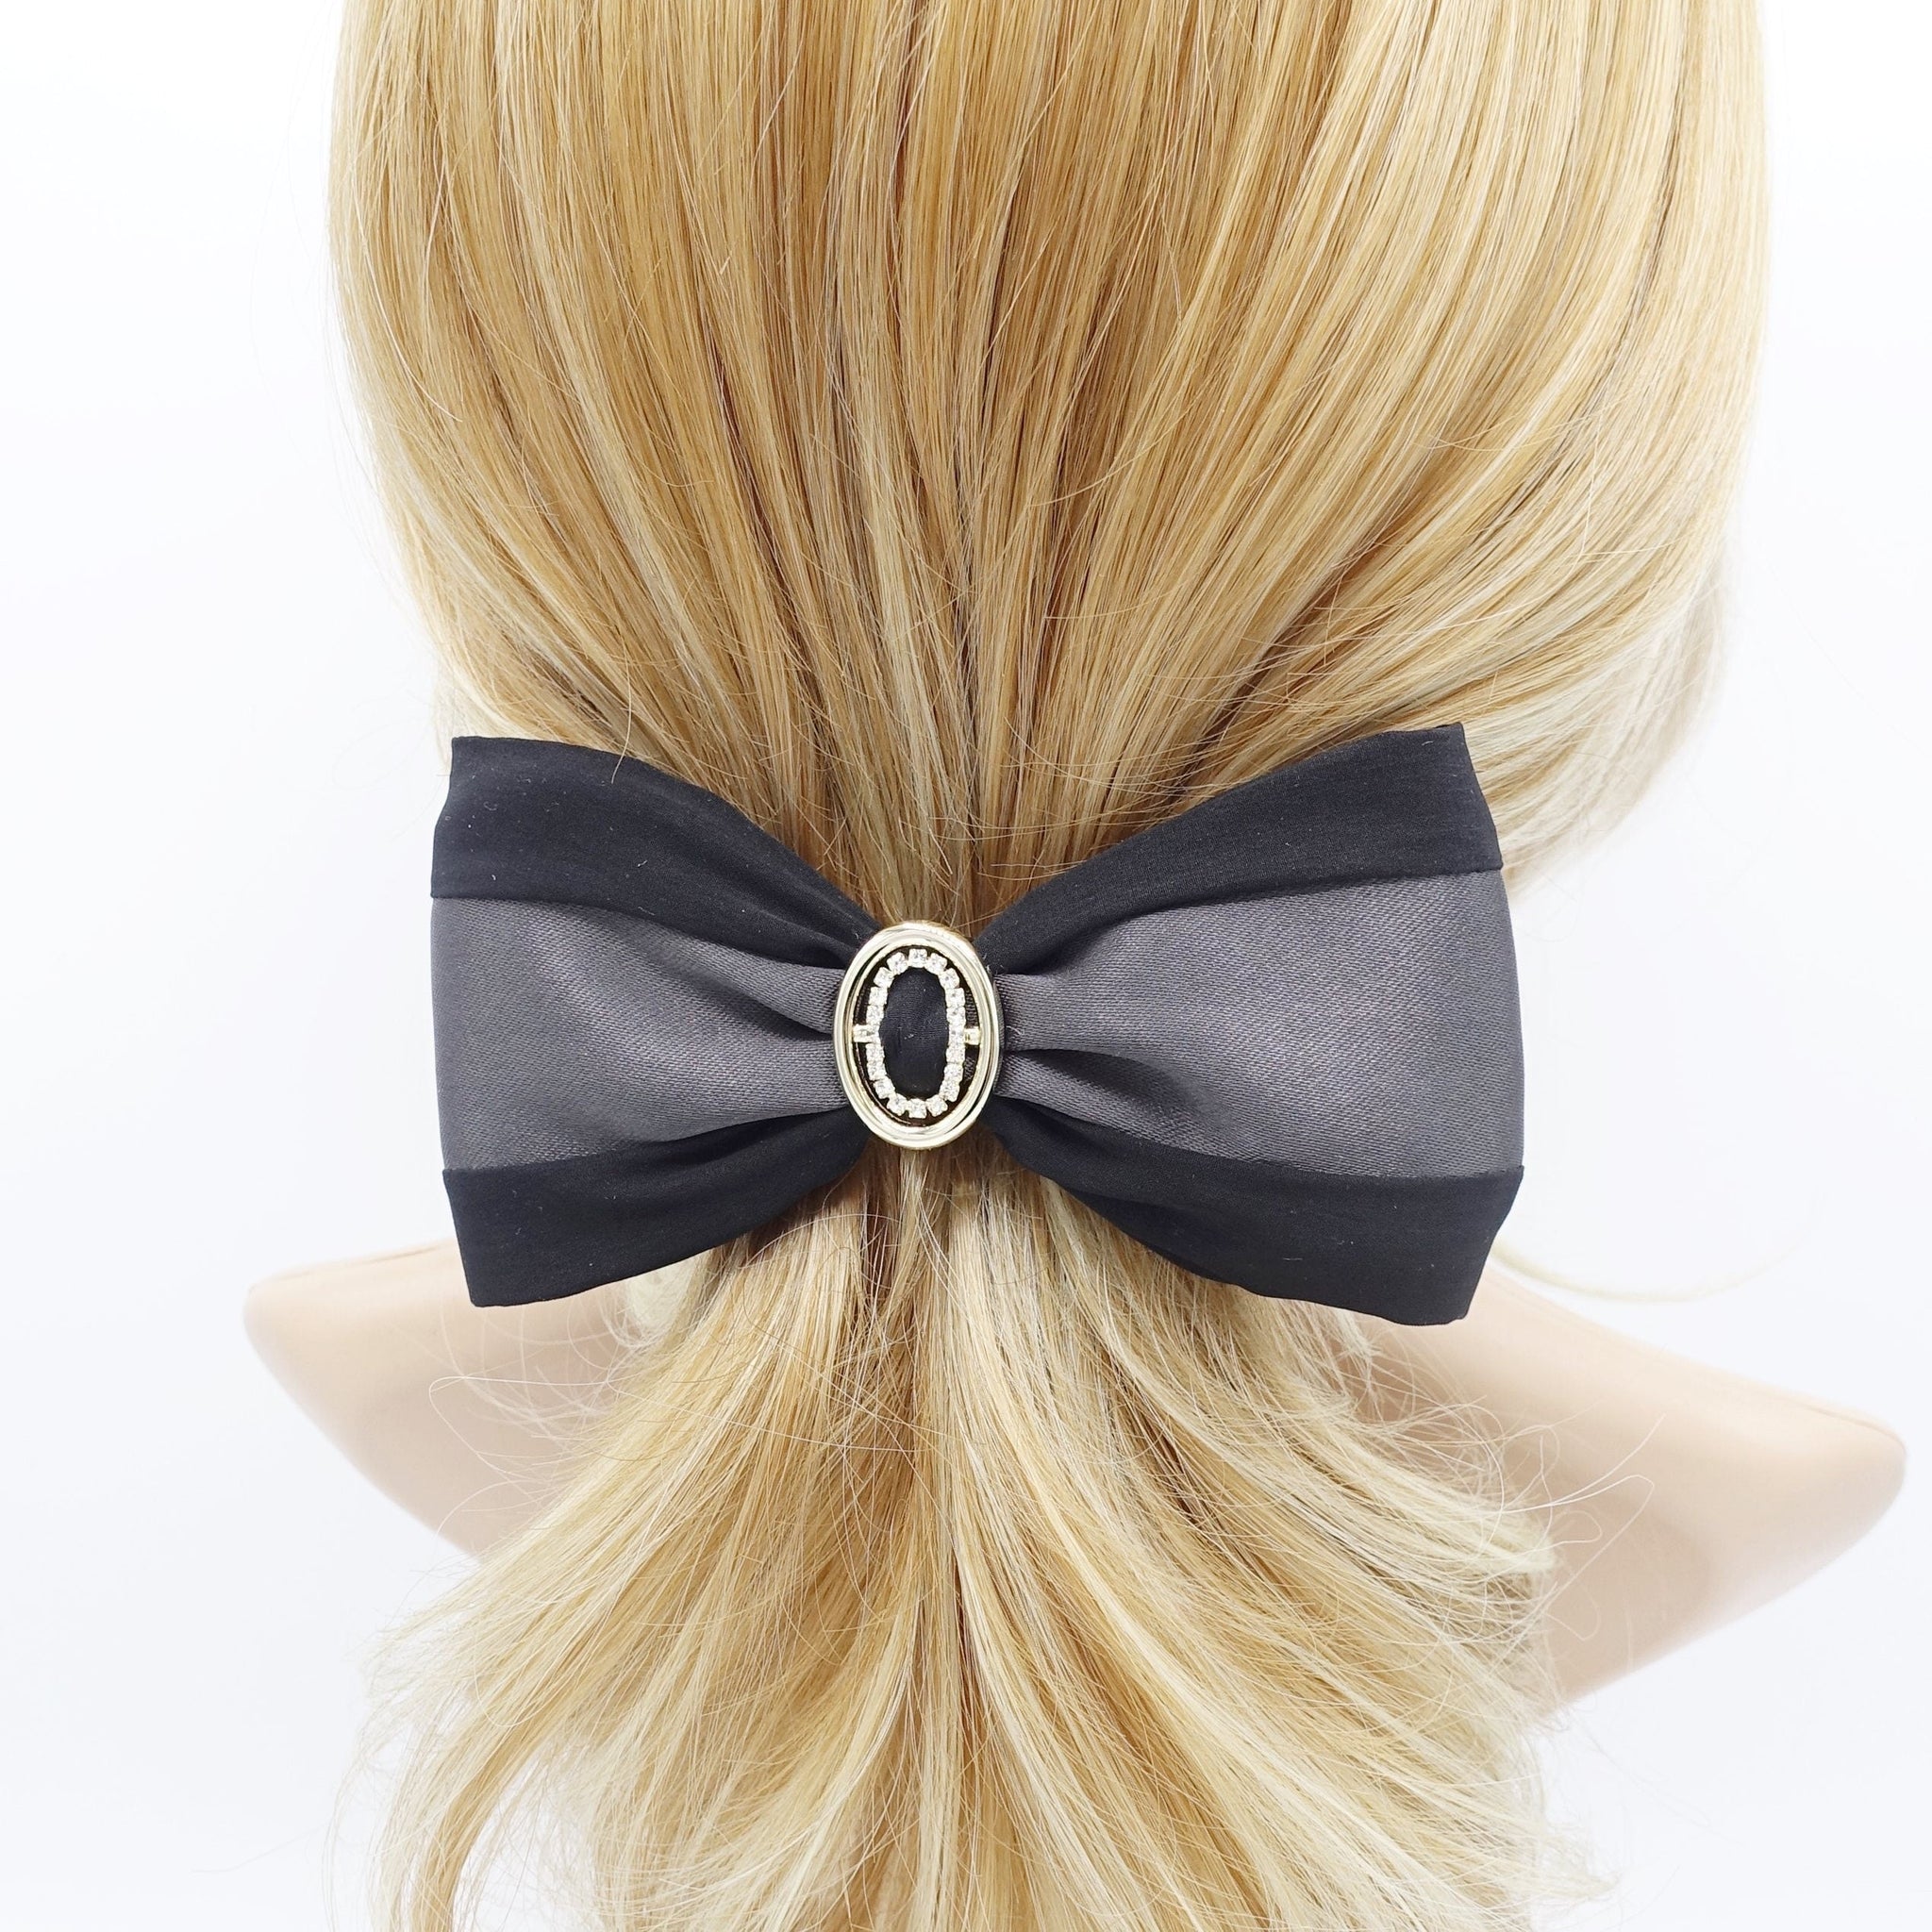 veryshine.com Barrette (Bow) Gray two tone satin hair bow rhinestone gold buckle embellished bow barrette